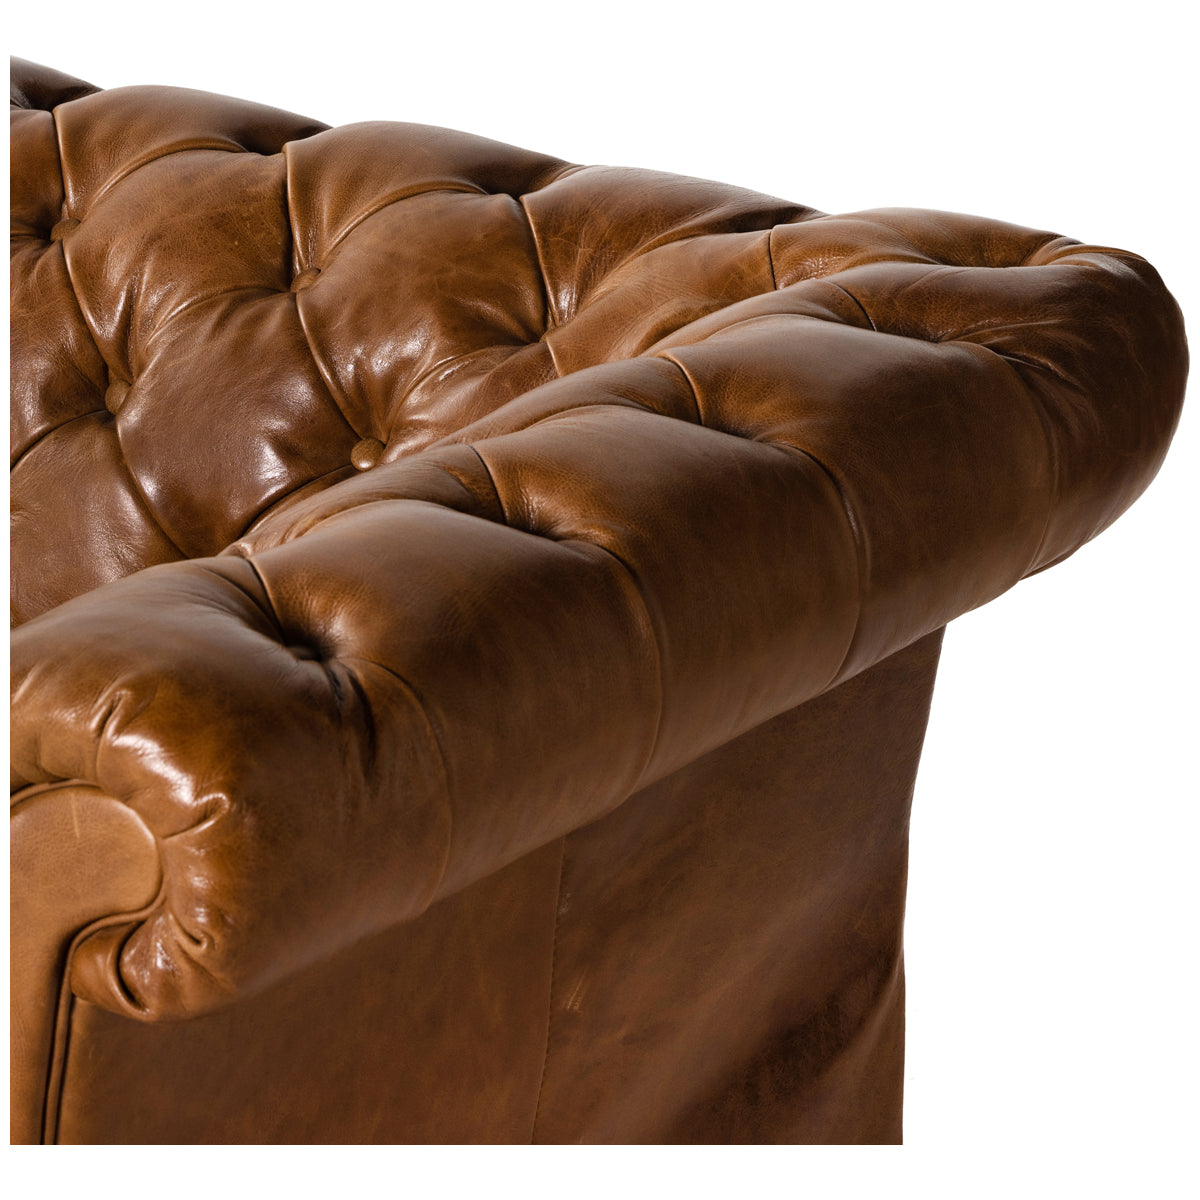 Four Hands Carnegie Briscoe Leather Sofa - Vintage Soft Camel